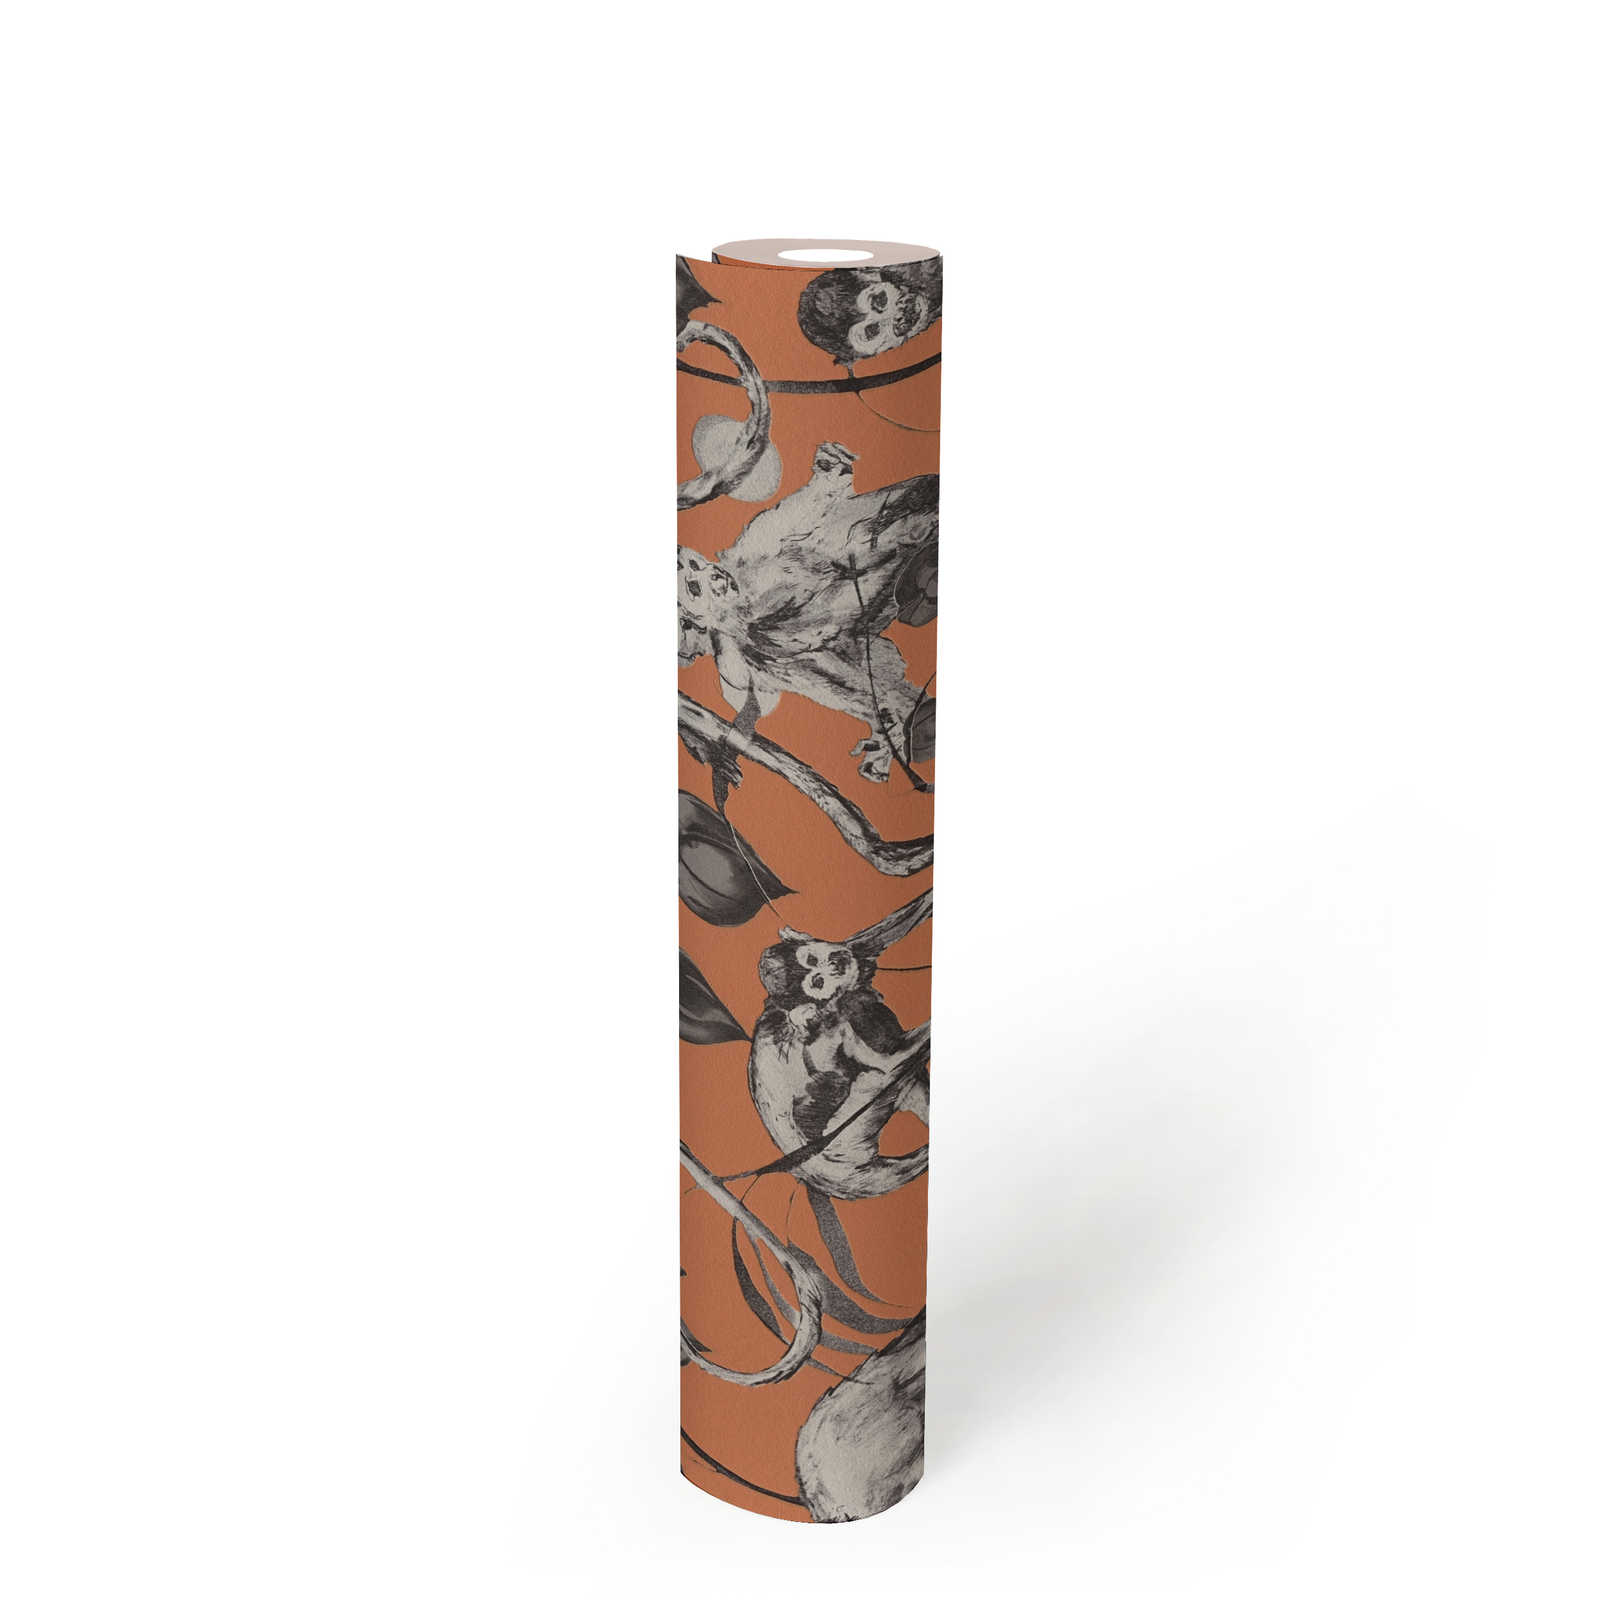             MICHALSKY wallpaper monkeys & jungle motif - orange, grey
        